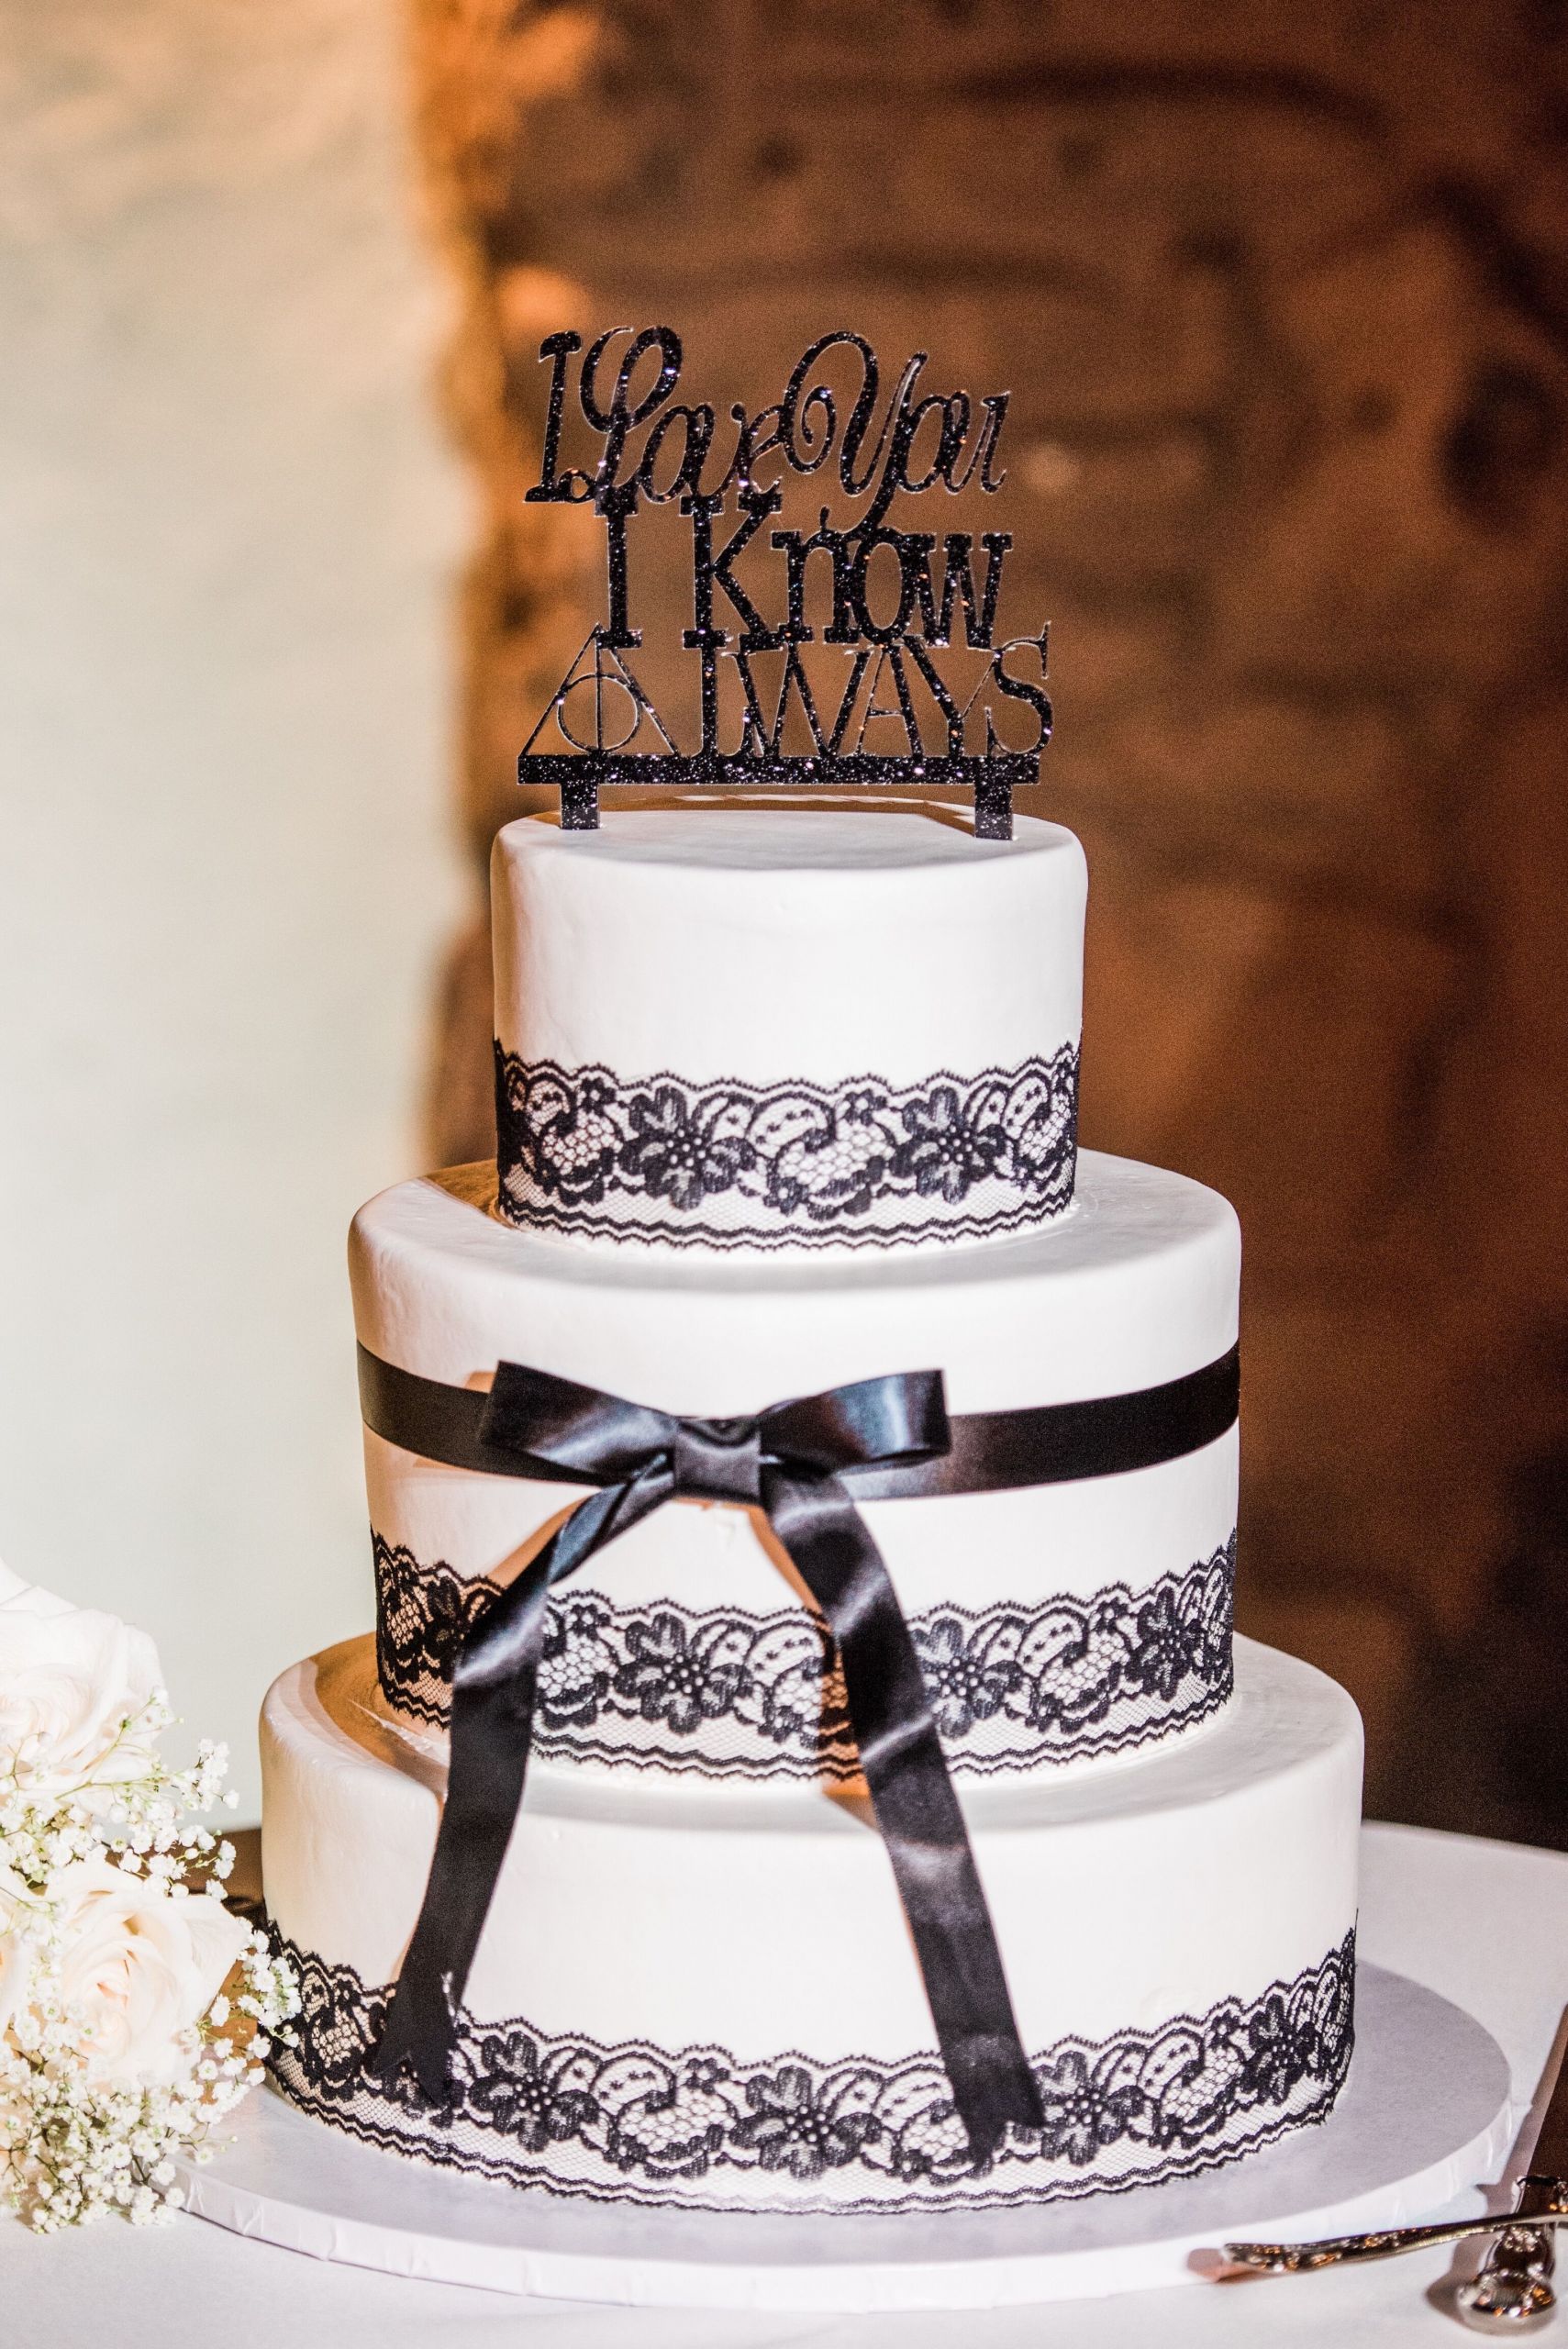 Harry Potter Wedding Cake
 "Harry Potter" and "Star Wars" Inspired Cake Topper